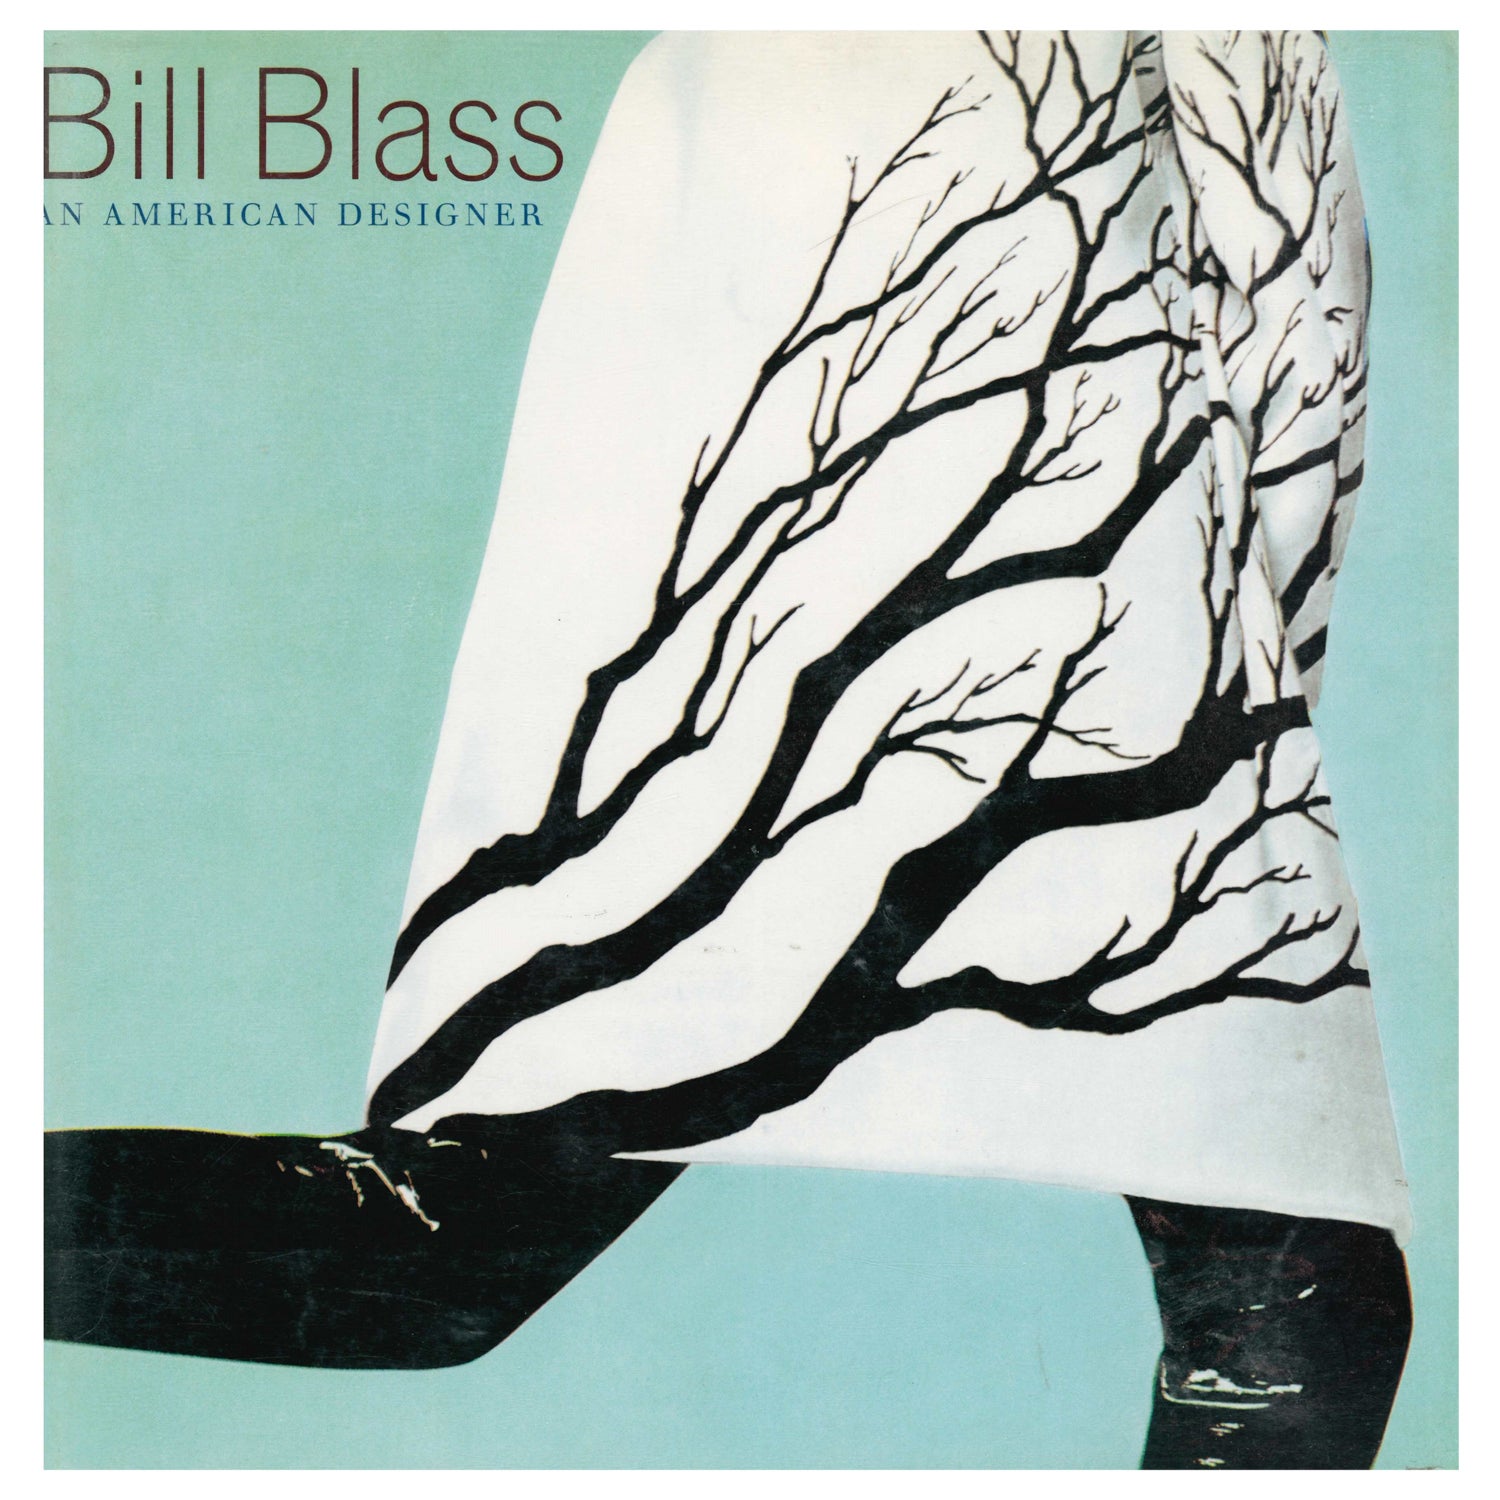 Bill Blass: an American Designer by H O'hagan, K Rowold & M Vollbracht (Book) For Sale